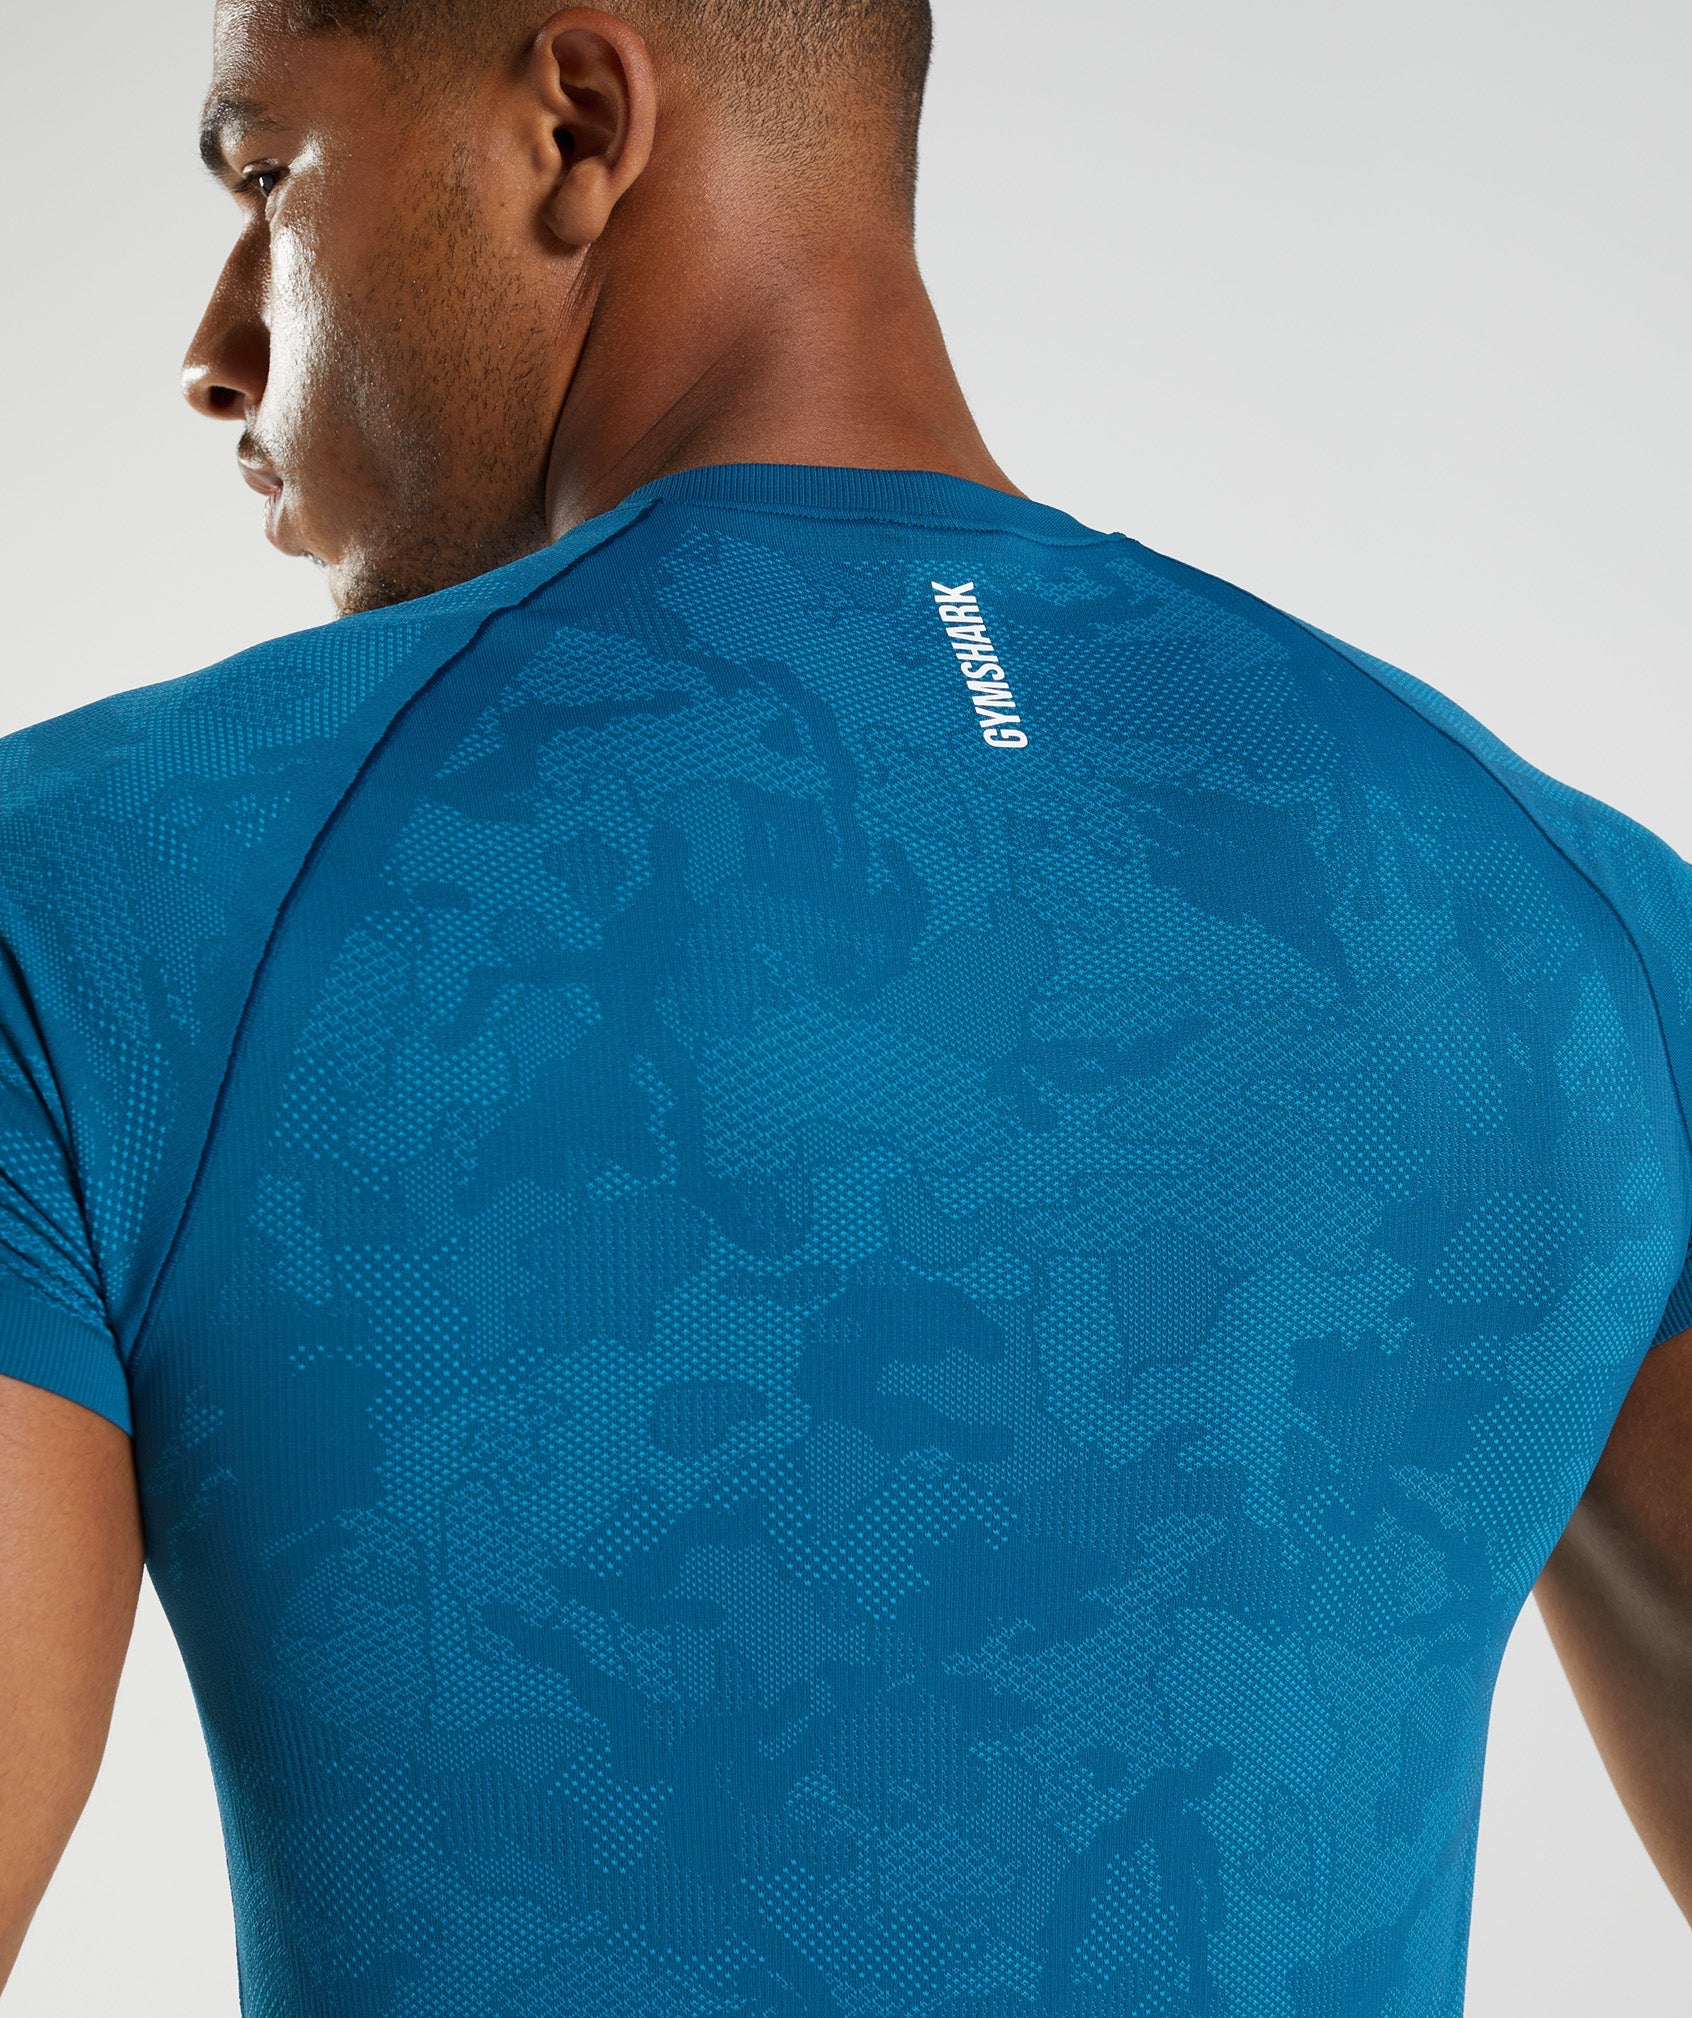 Gymshark Geo Seamless Long Sleeve T-Shirt - Atlantic Blue/Shark